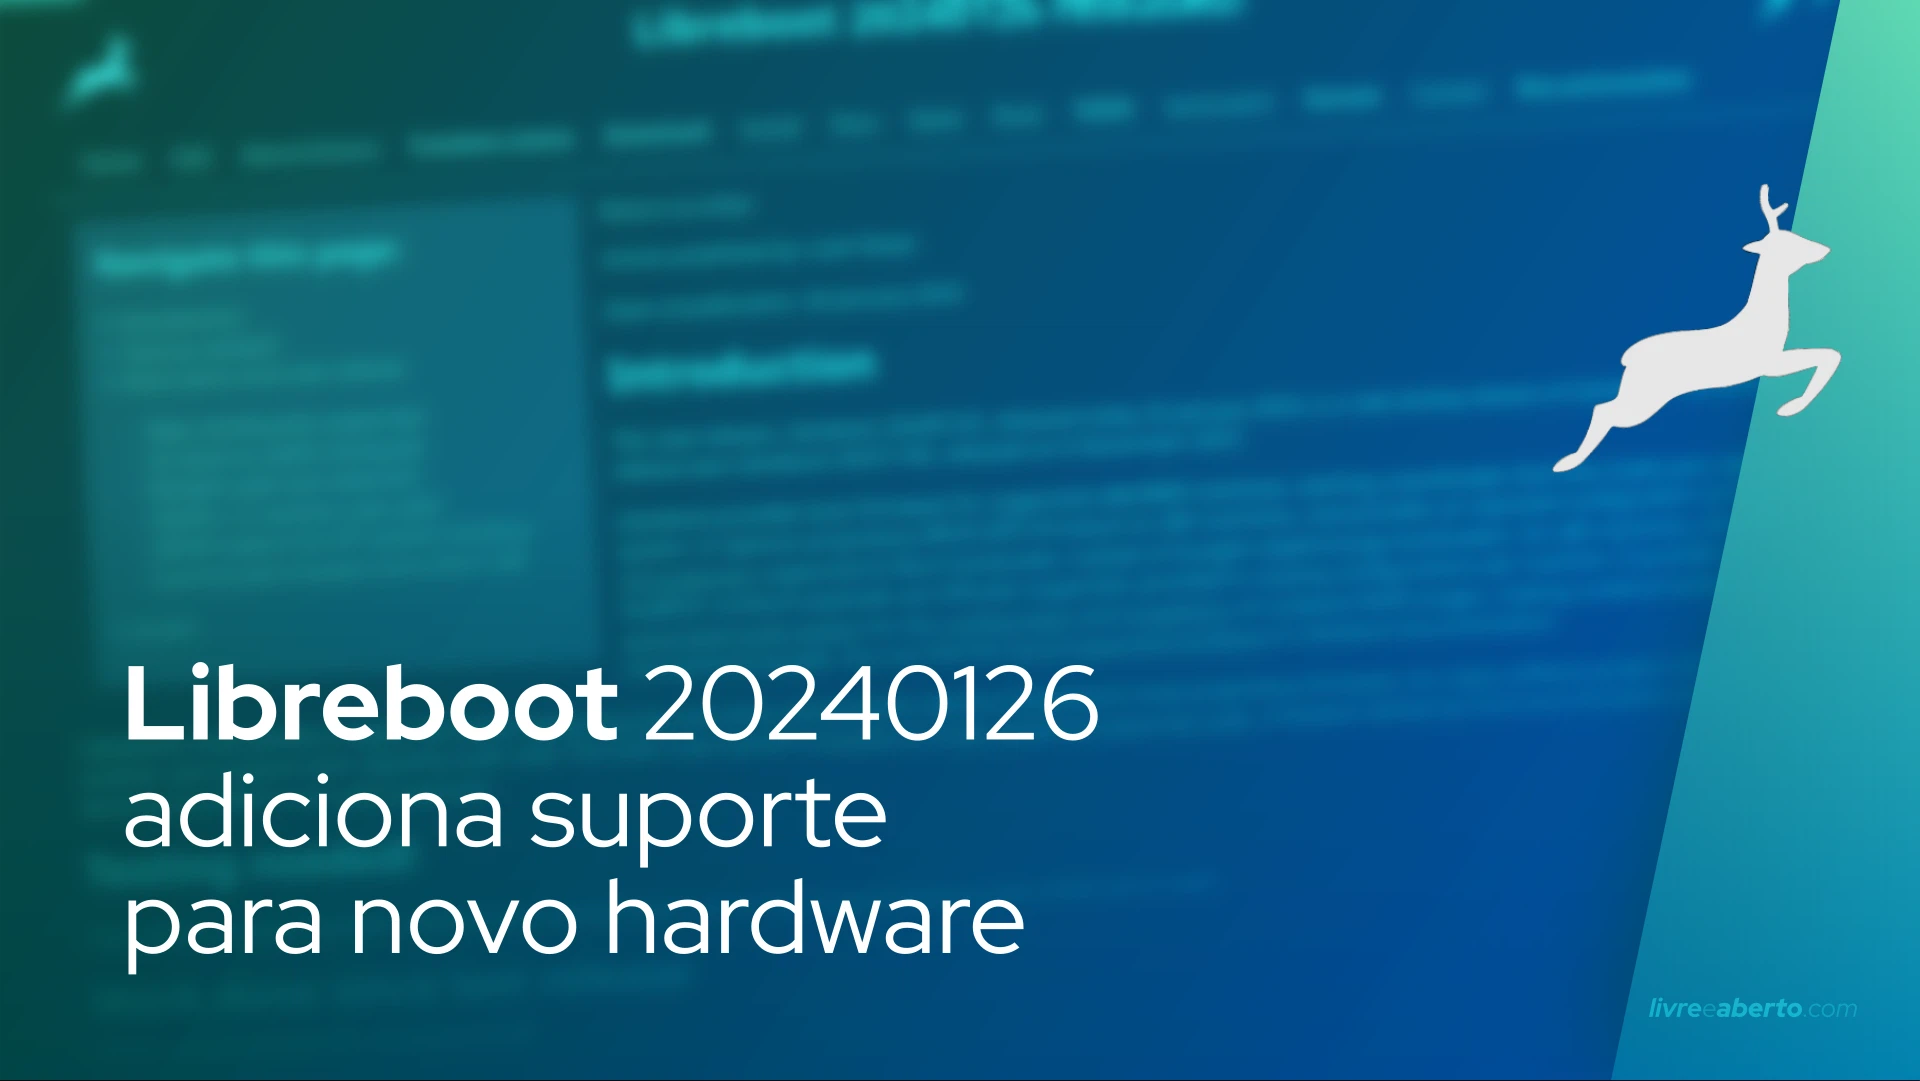 Libreboot 20240126 adiciona suporte para novo hardware